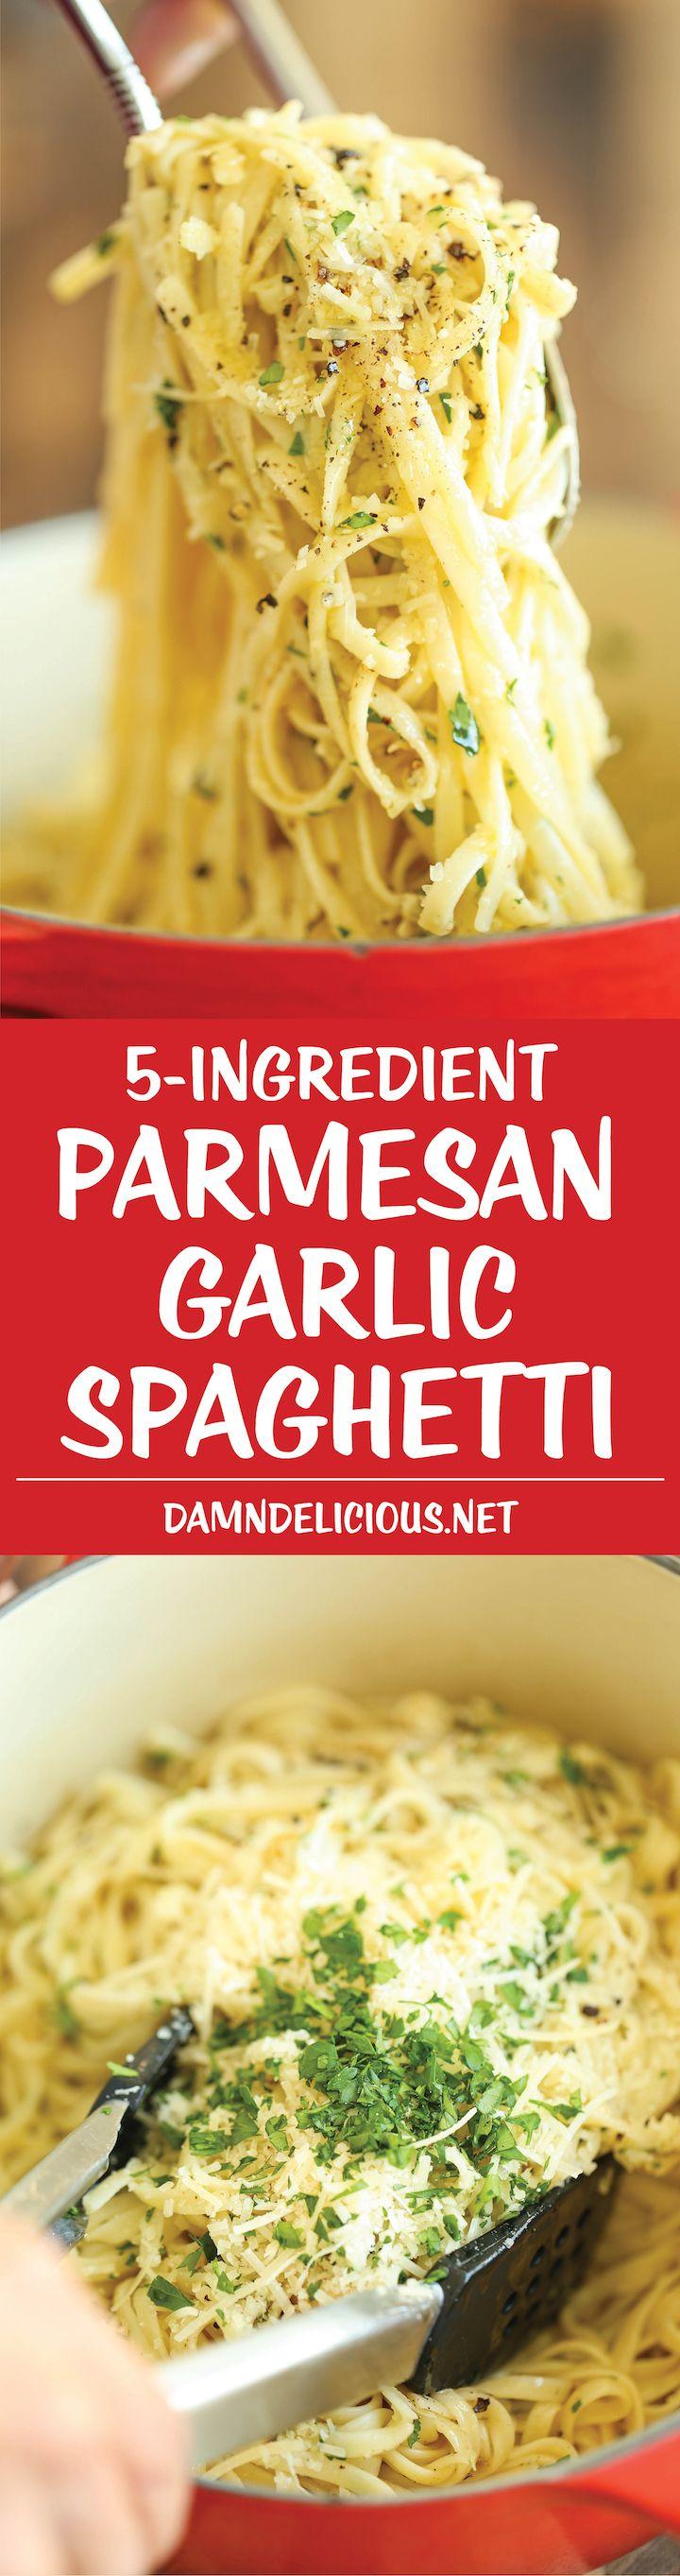 Wedding - Parmesan Garlic Spaghetti